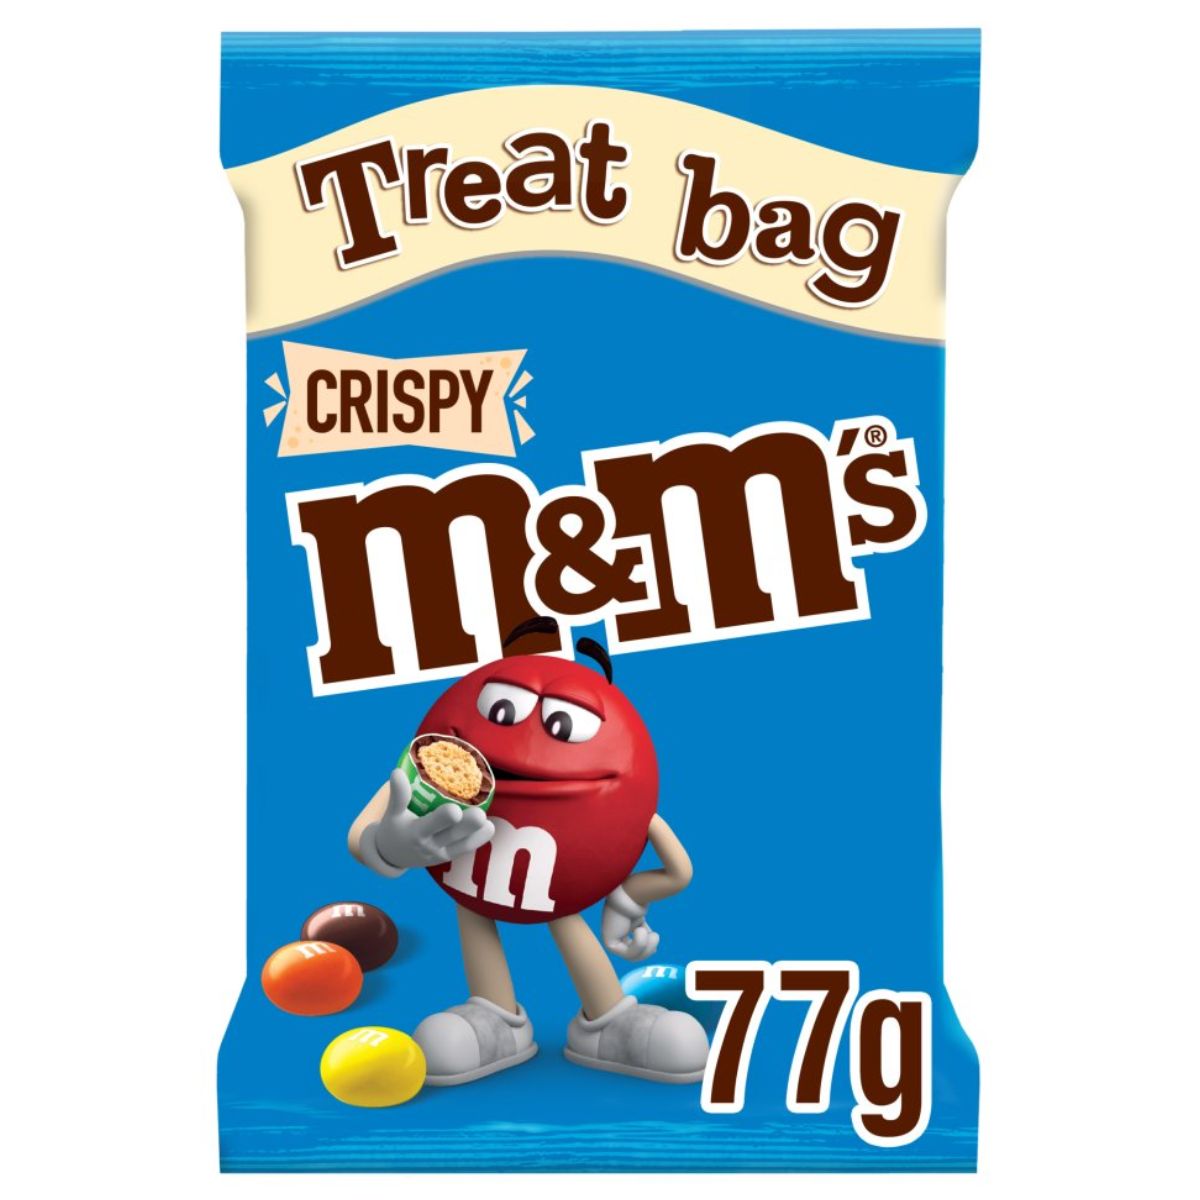 M&M's - Crispy Chocolate Treat Bag - 771g.